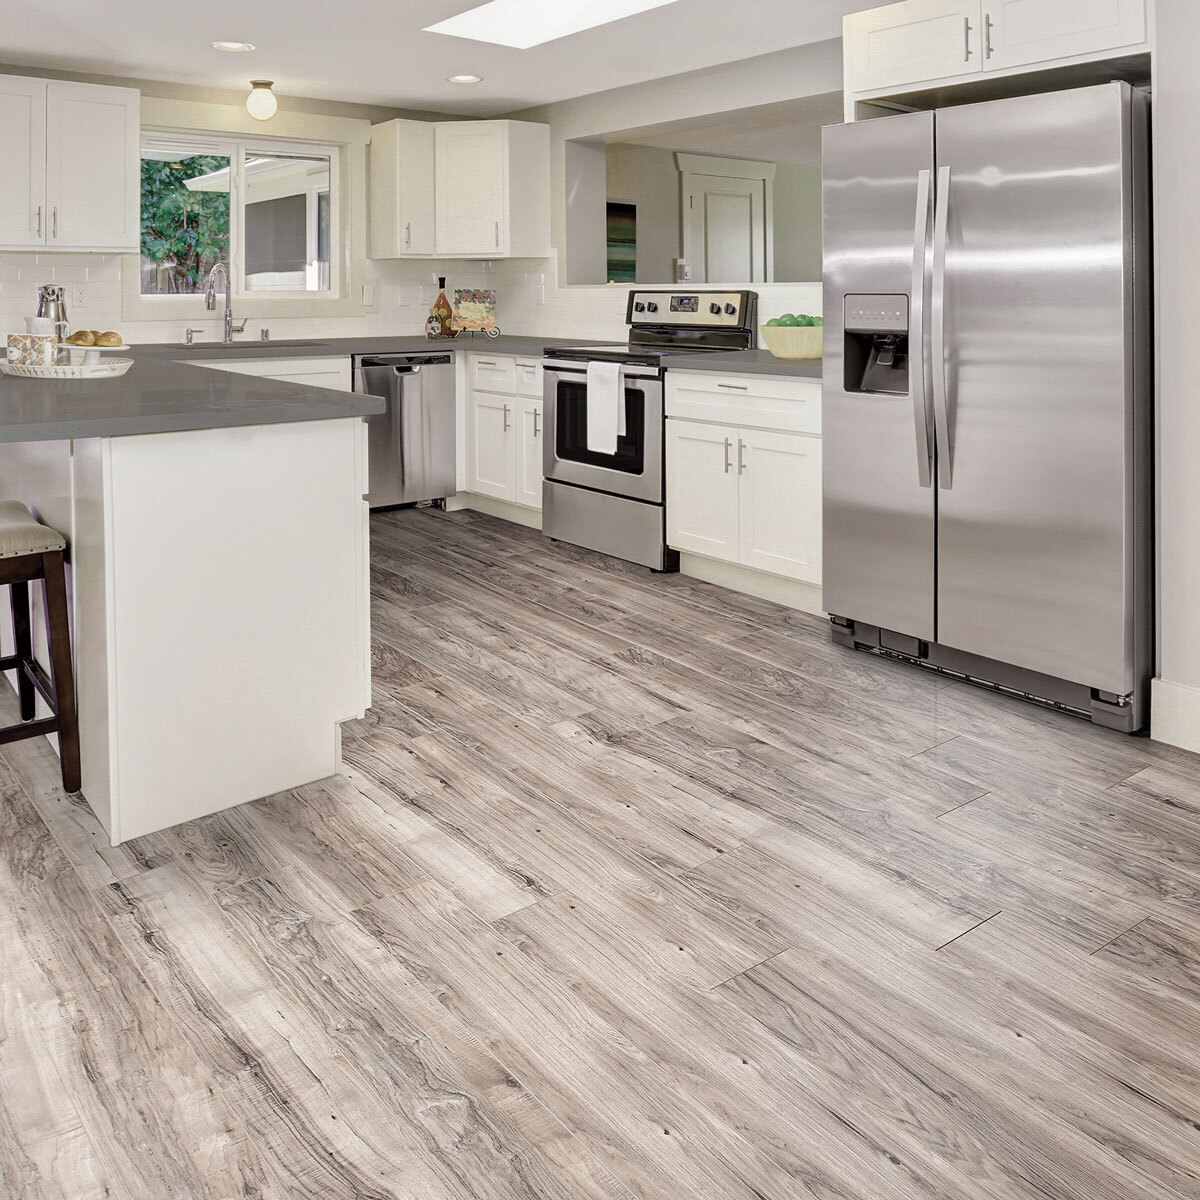 Ac5 Laminate Flooring, Kitchen With Grey Laminate Flooring